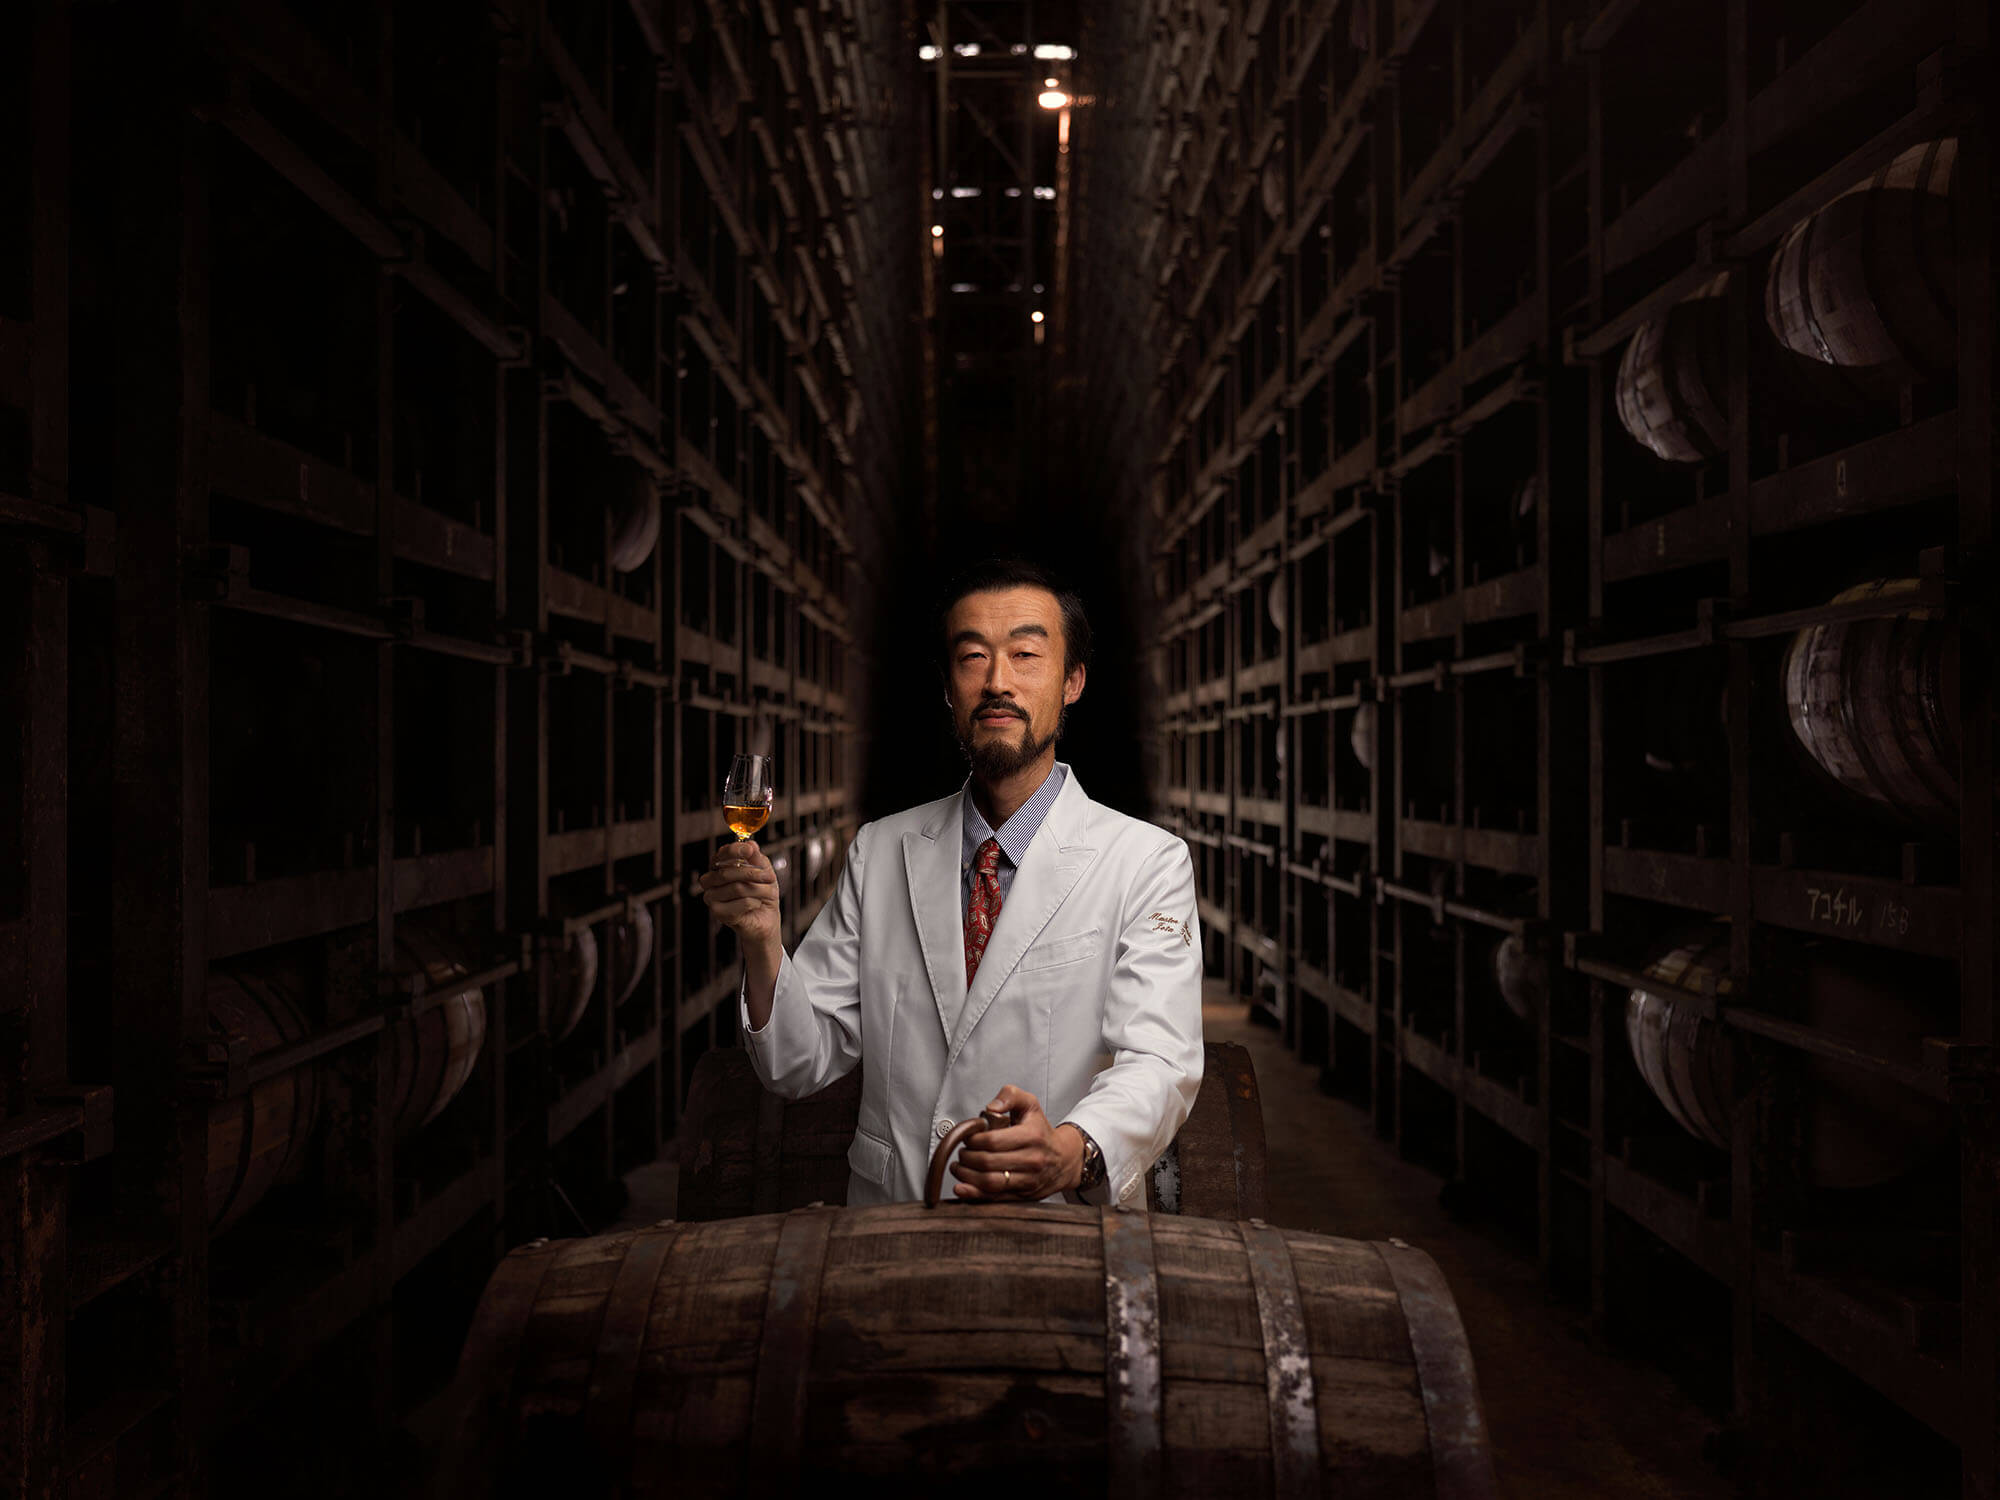 IBcntI5XGBS_whisky-blender-Jota-Tanaka-works-for-the-Kirin-Fuji-Gotemba-Distillery-at-the-base-of-Mt.-Fuji-as-the-distillery’s-Master-Blender.jpg